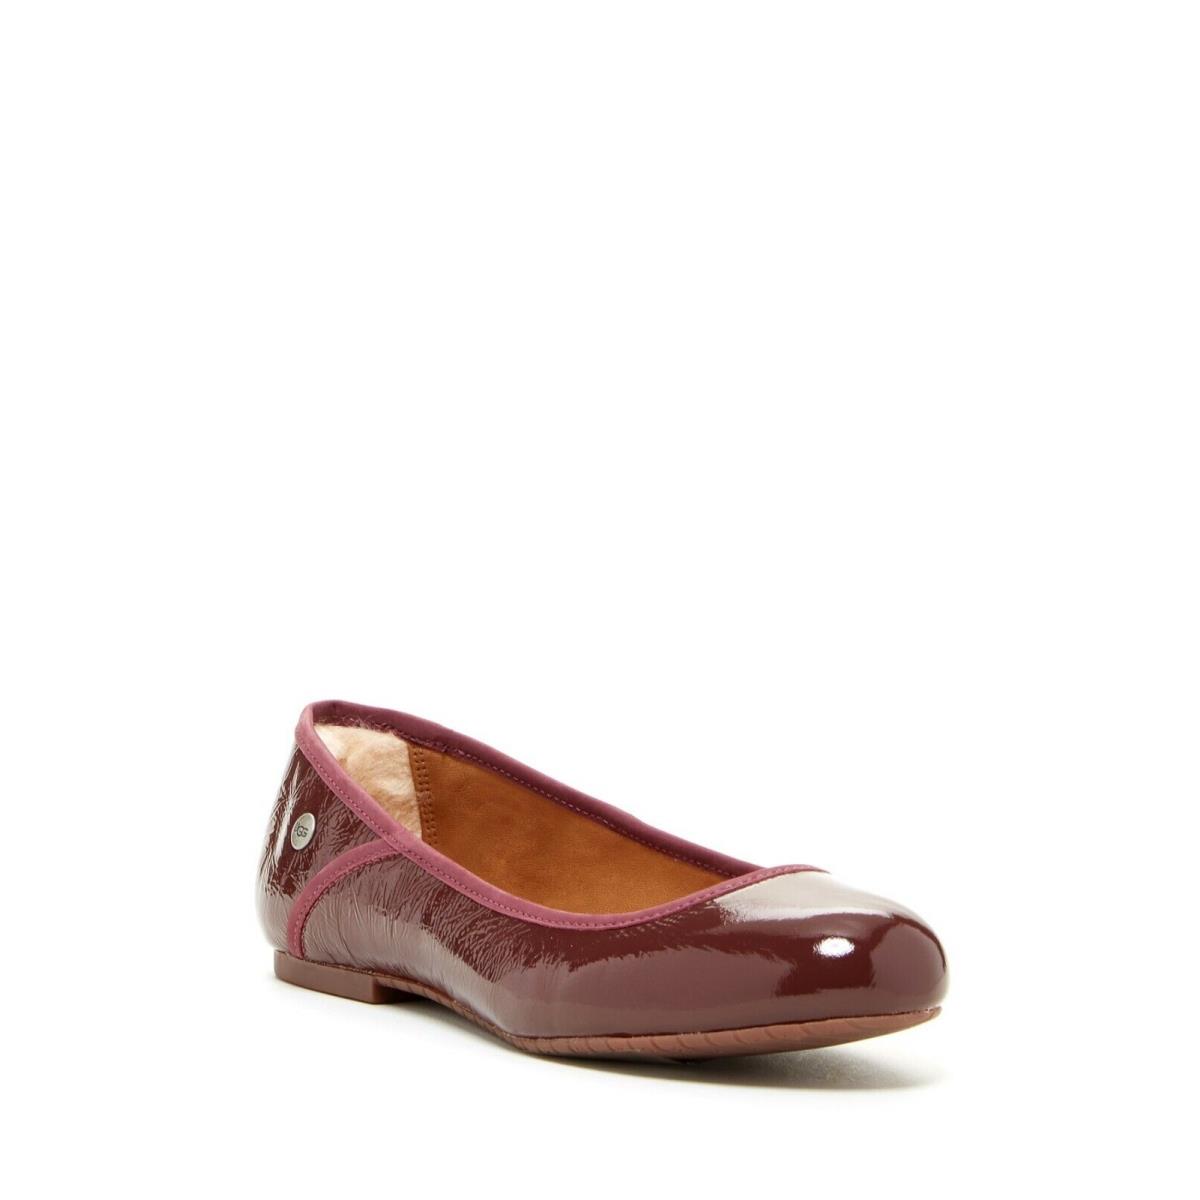 Ugg Australia Women`s Size 9 Brown Antora Ballet Flat Shoe - Brown